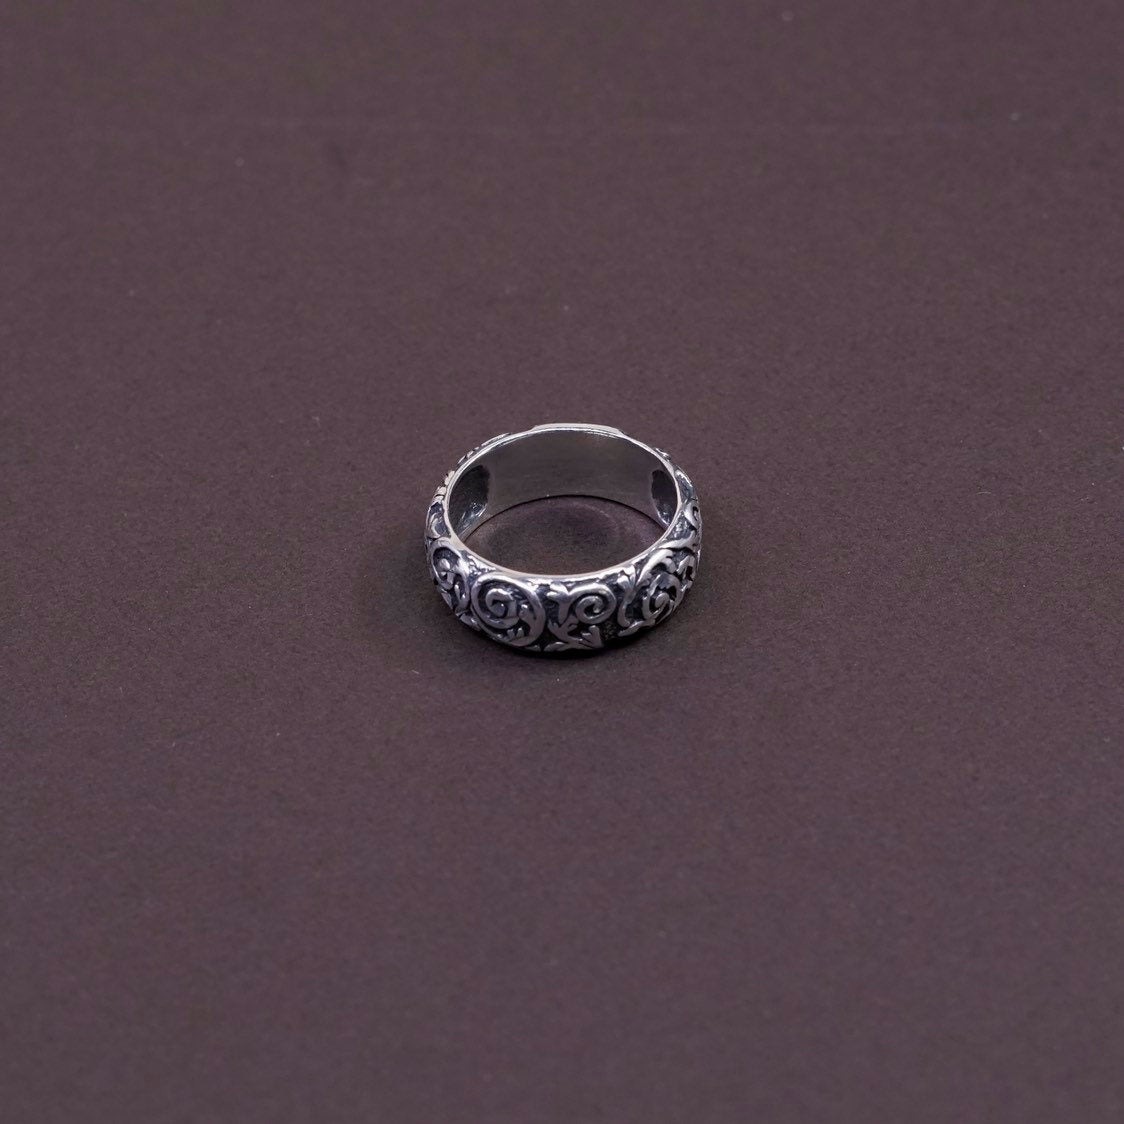 sz 6, vtg carolyn pollack relios Sterling silver handmade ring, 925 flower band